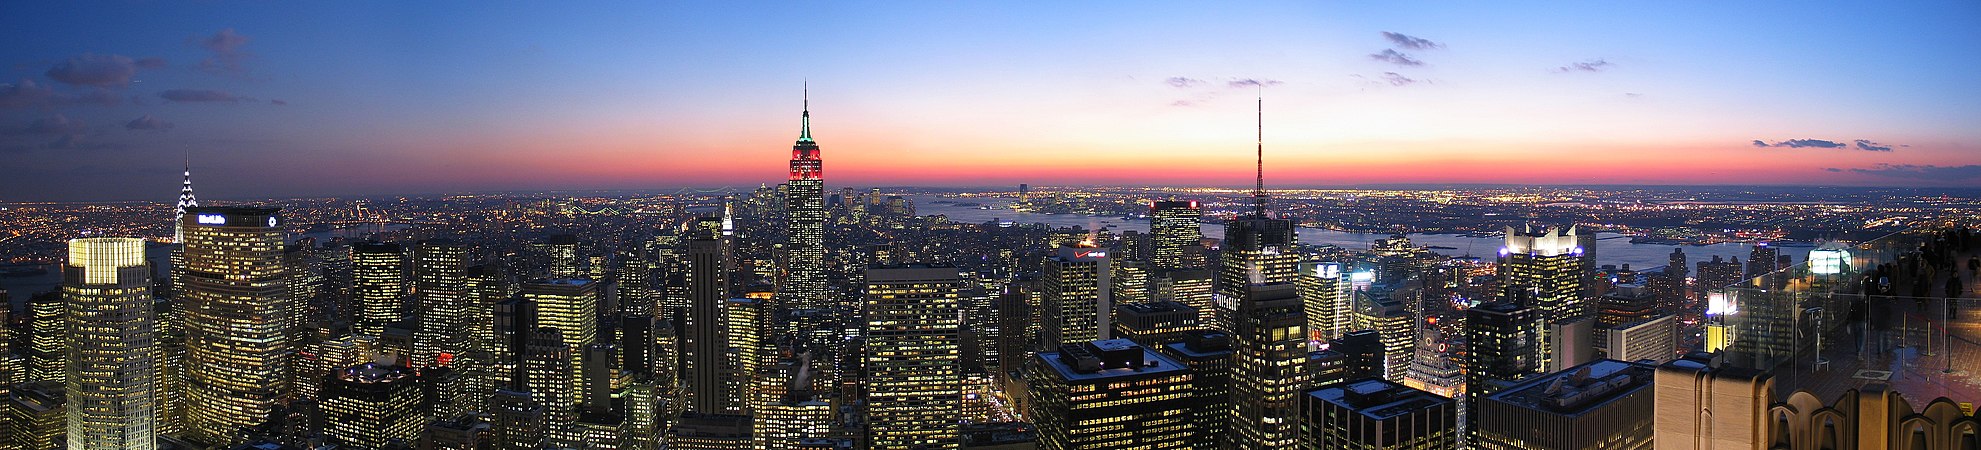 New York City from the 30 Rockefeller Plaza, by Daniel Schwen